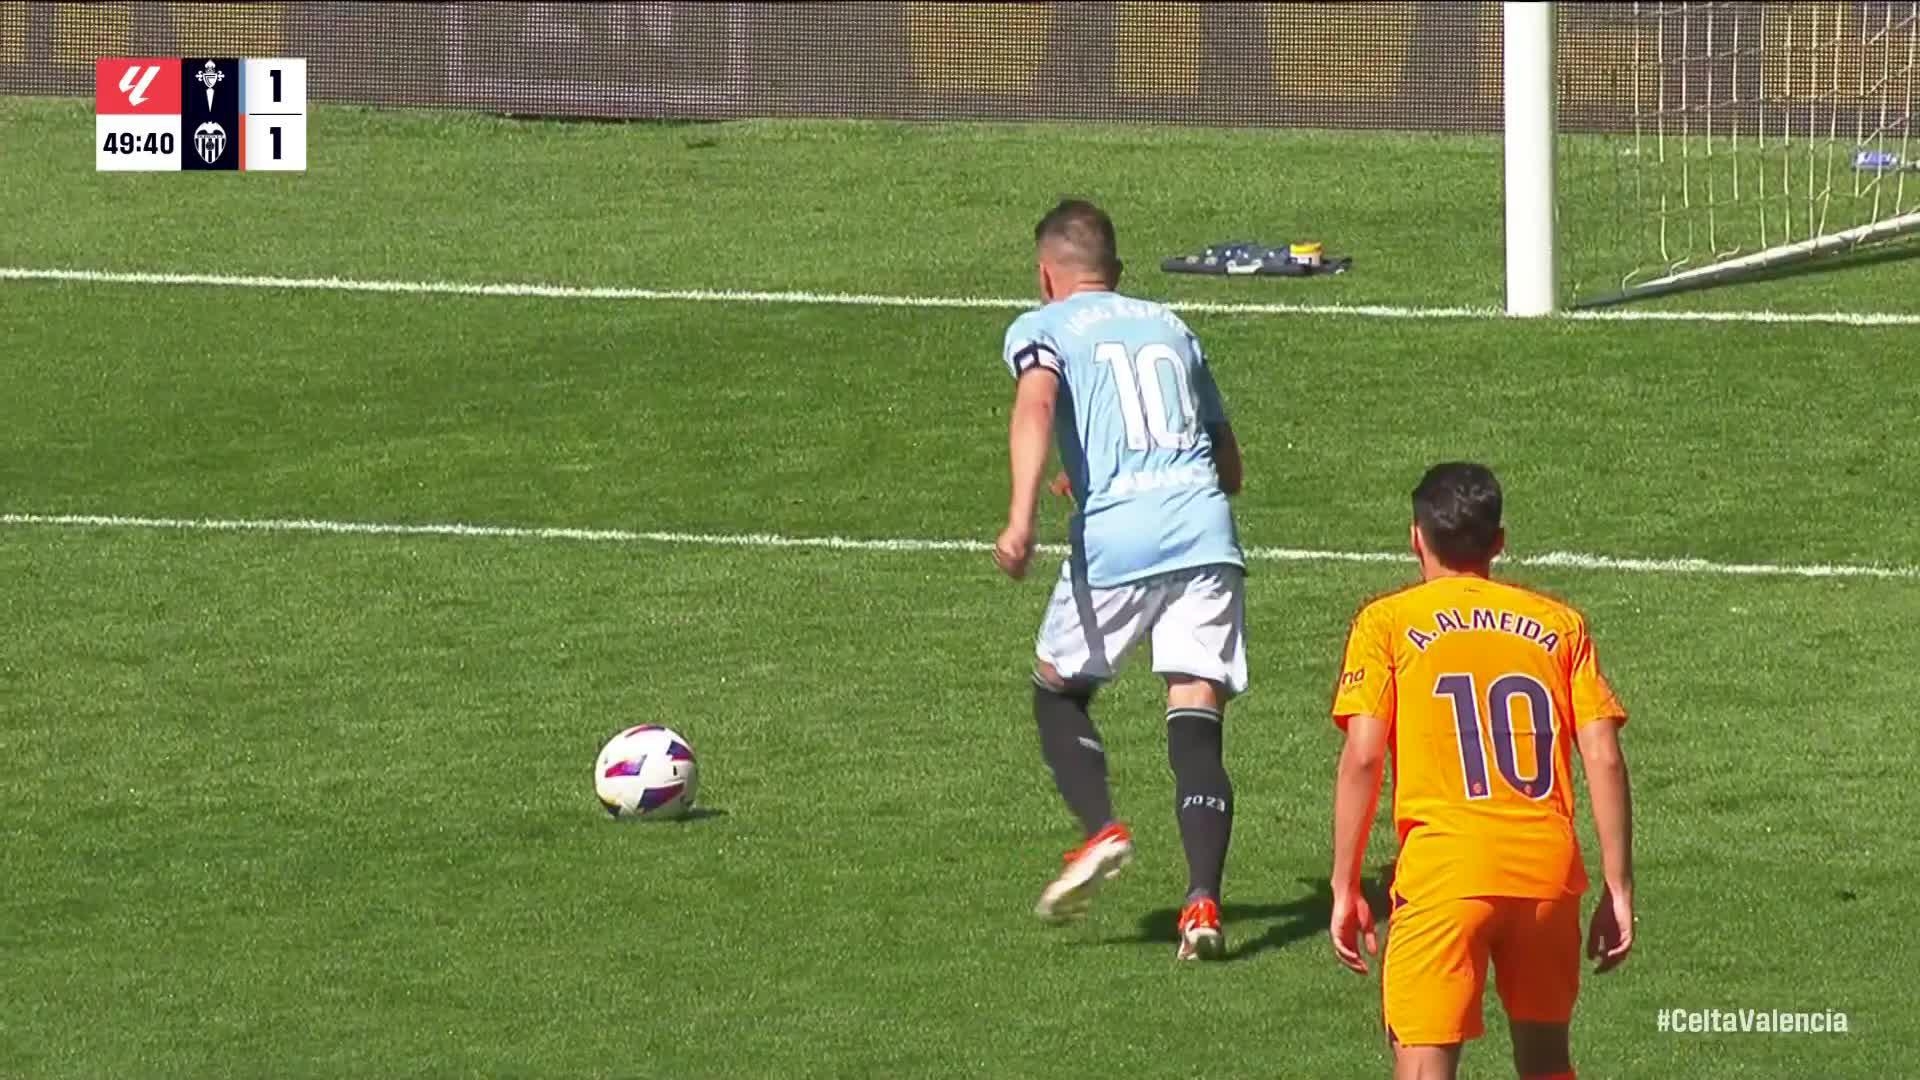 Iago Aspas slots home Penalty Goals vs. Valencia